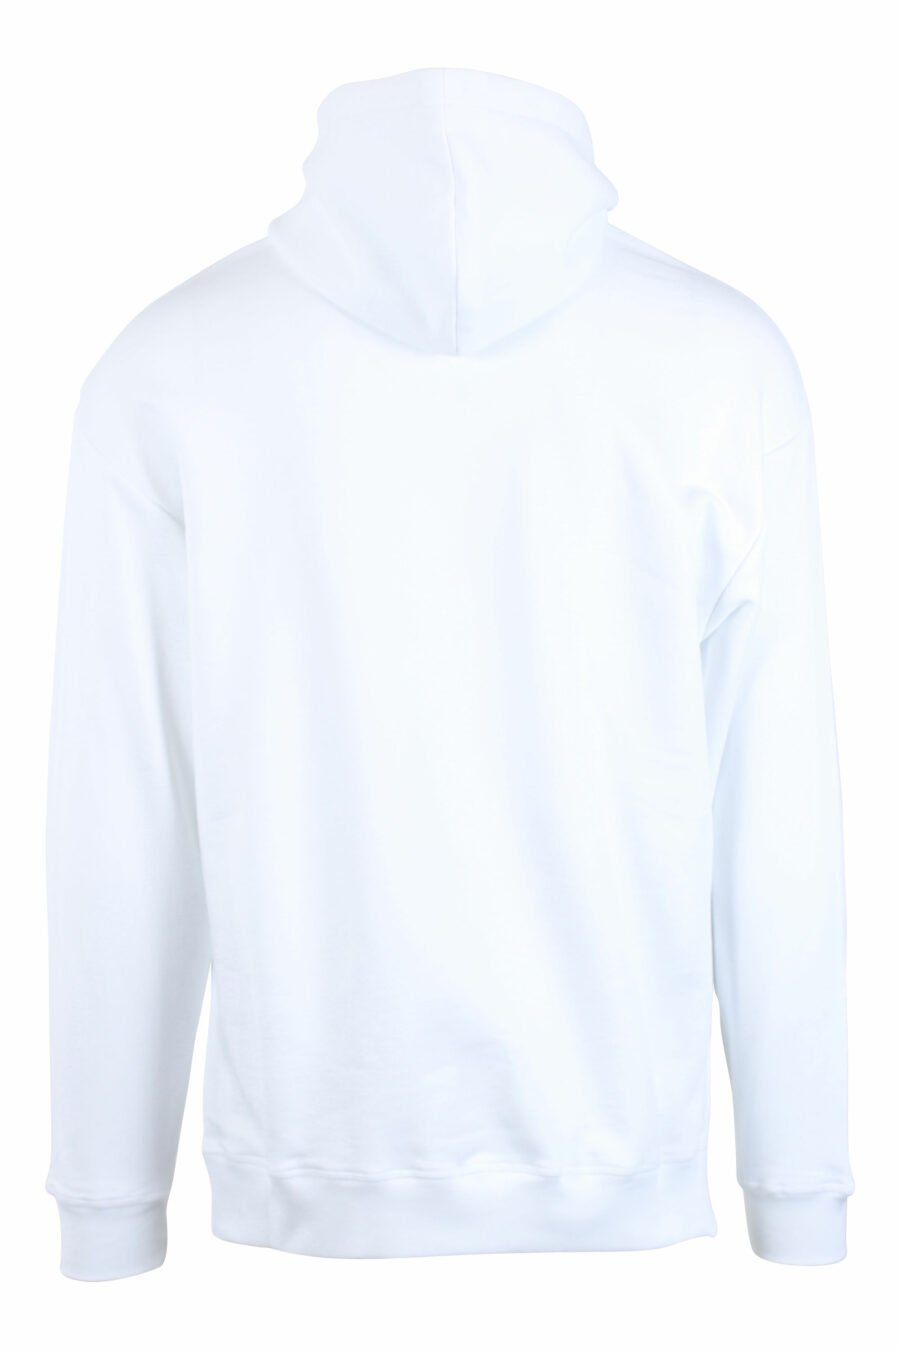 Weißes Kapuzensweatshirt mit doppeltem "Smiley"-Minilogo - IMG 2635